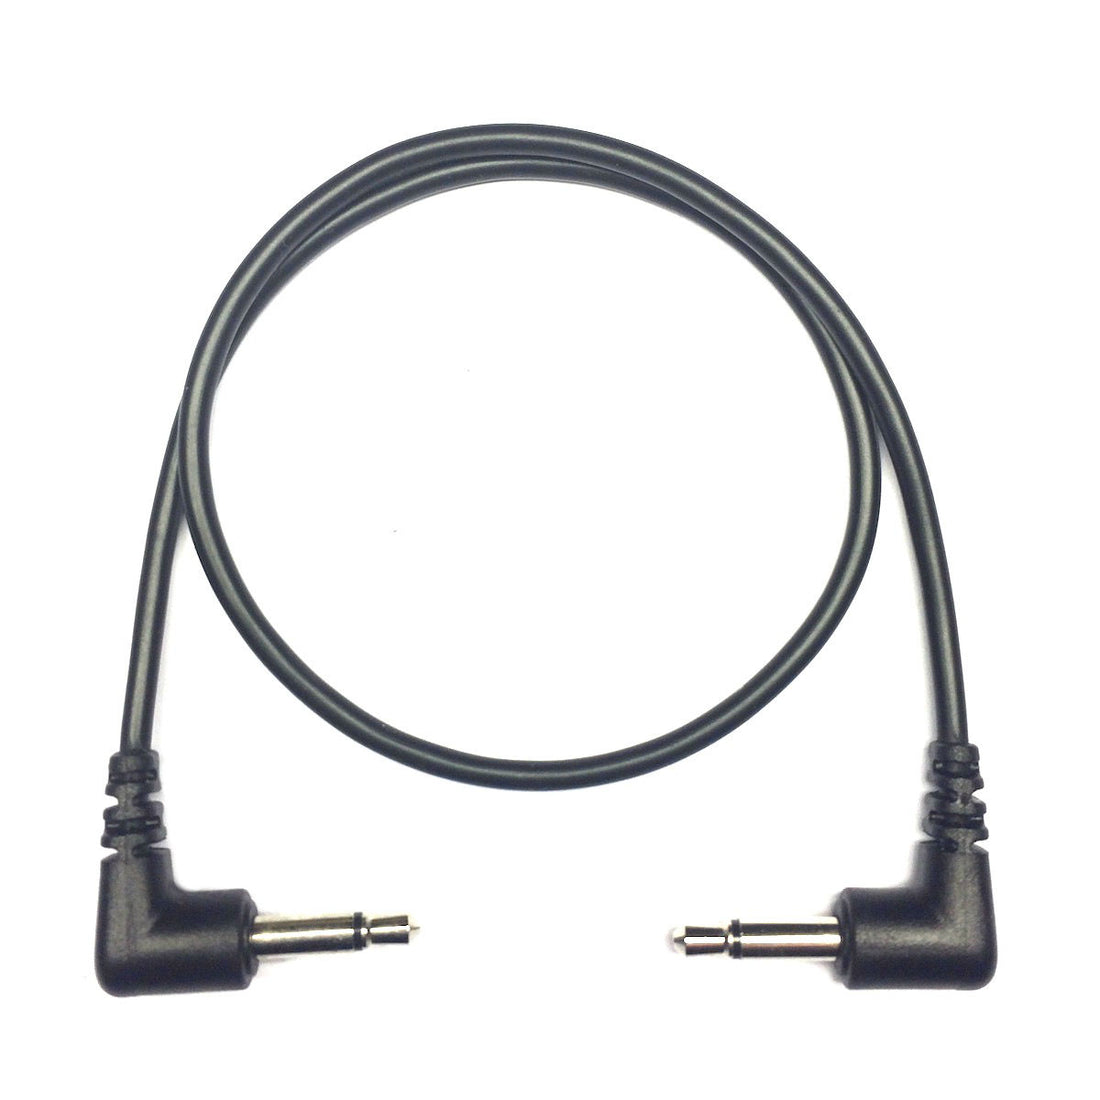 Patch Cable - Black 30cm (6 Pack)